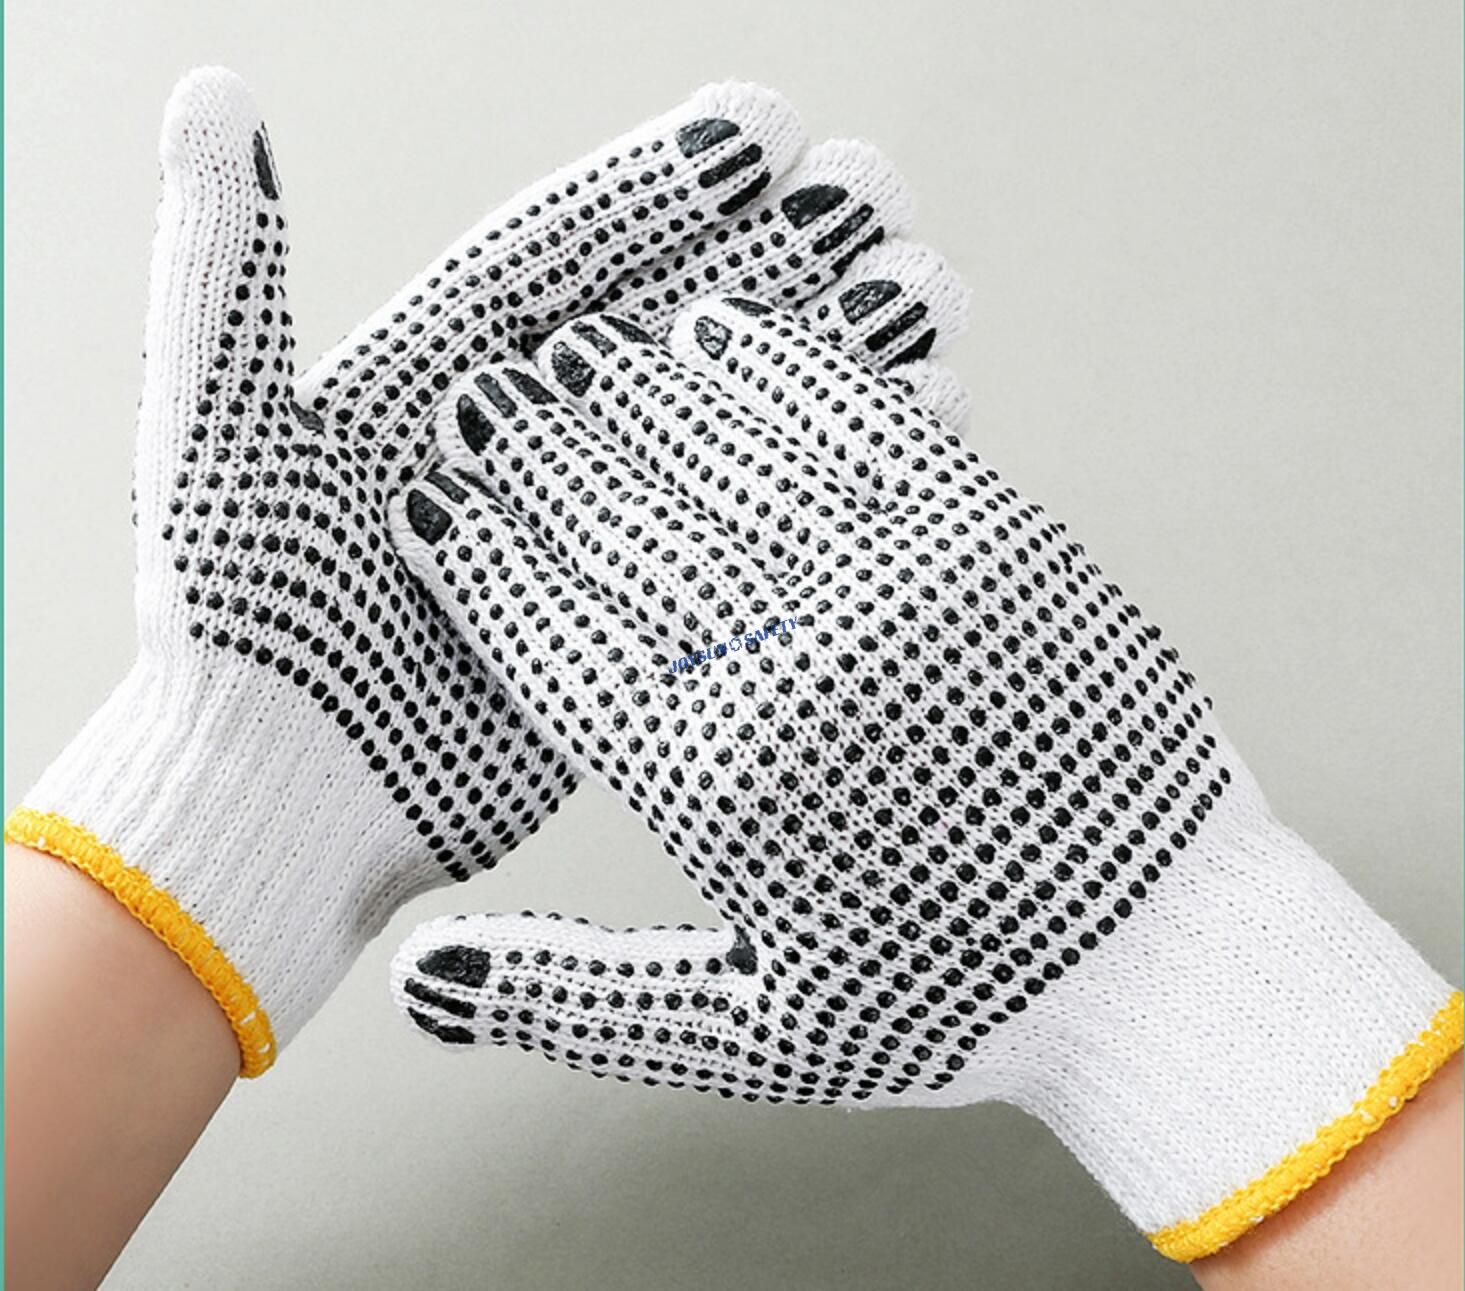 CKDD05 10 Gauge String Knit Work Gloves with PVC Grip on both palm